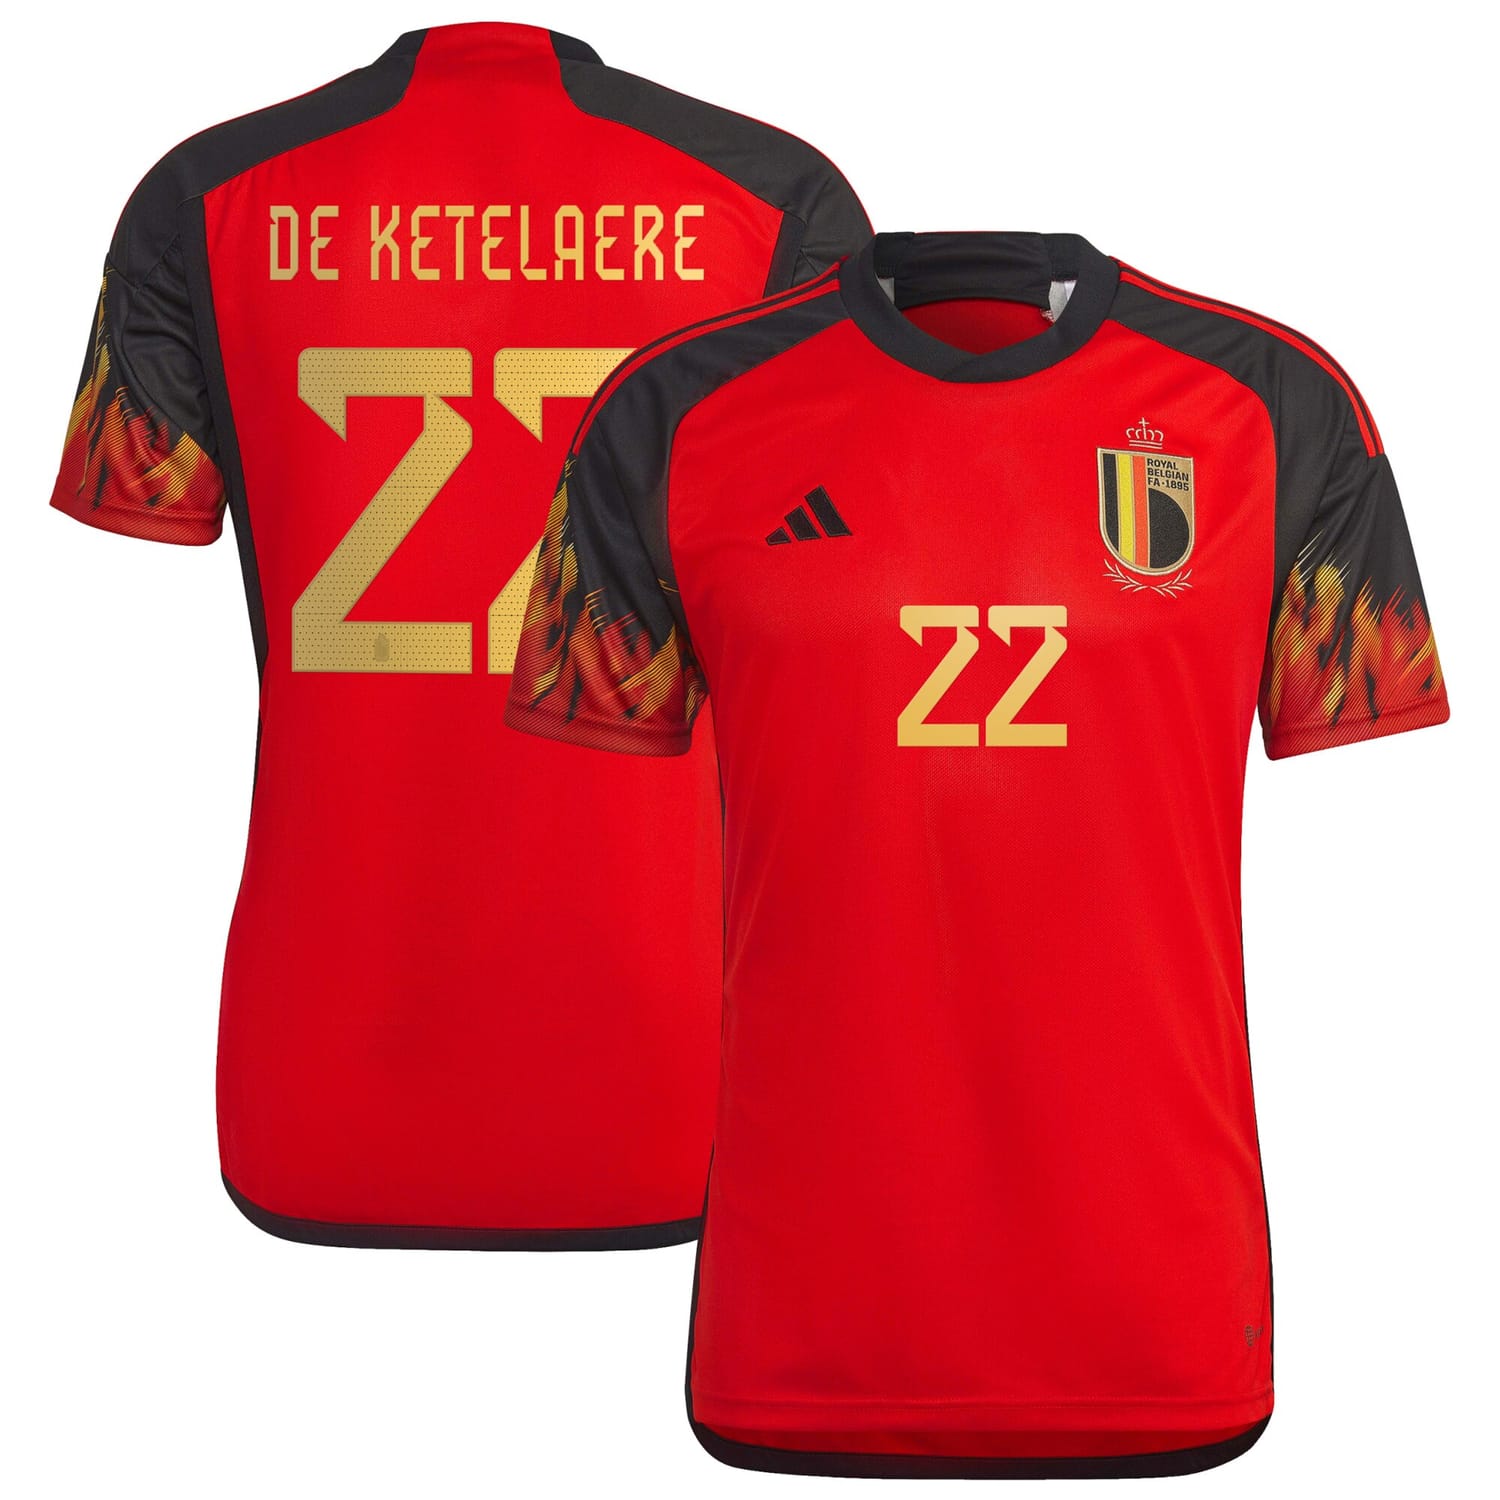 Belgium National Team Home Jersey Shirt 2022 player Charles De Ketelaere 22 printing for Men